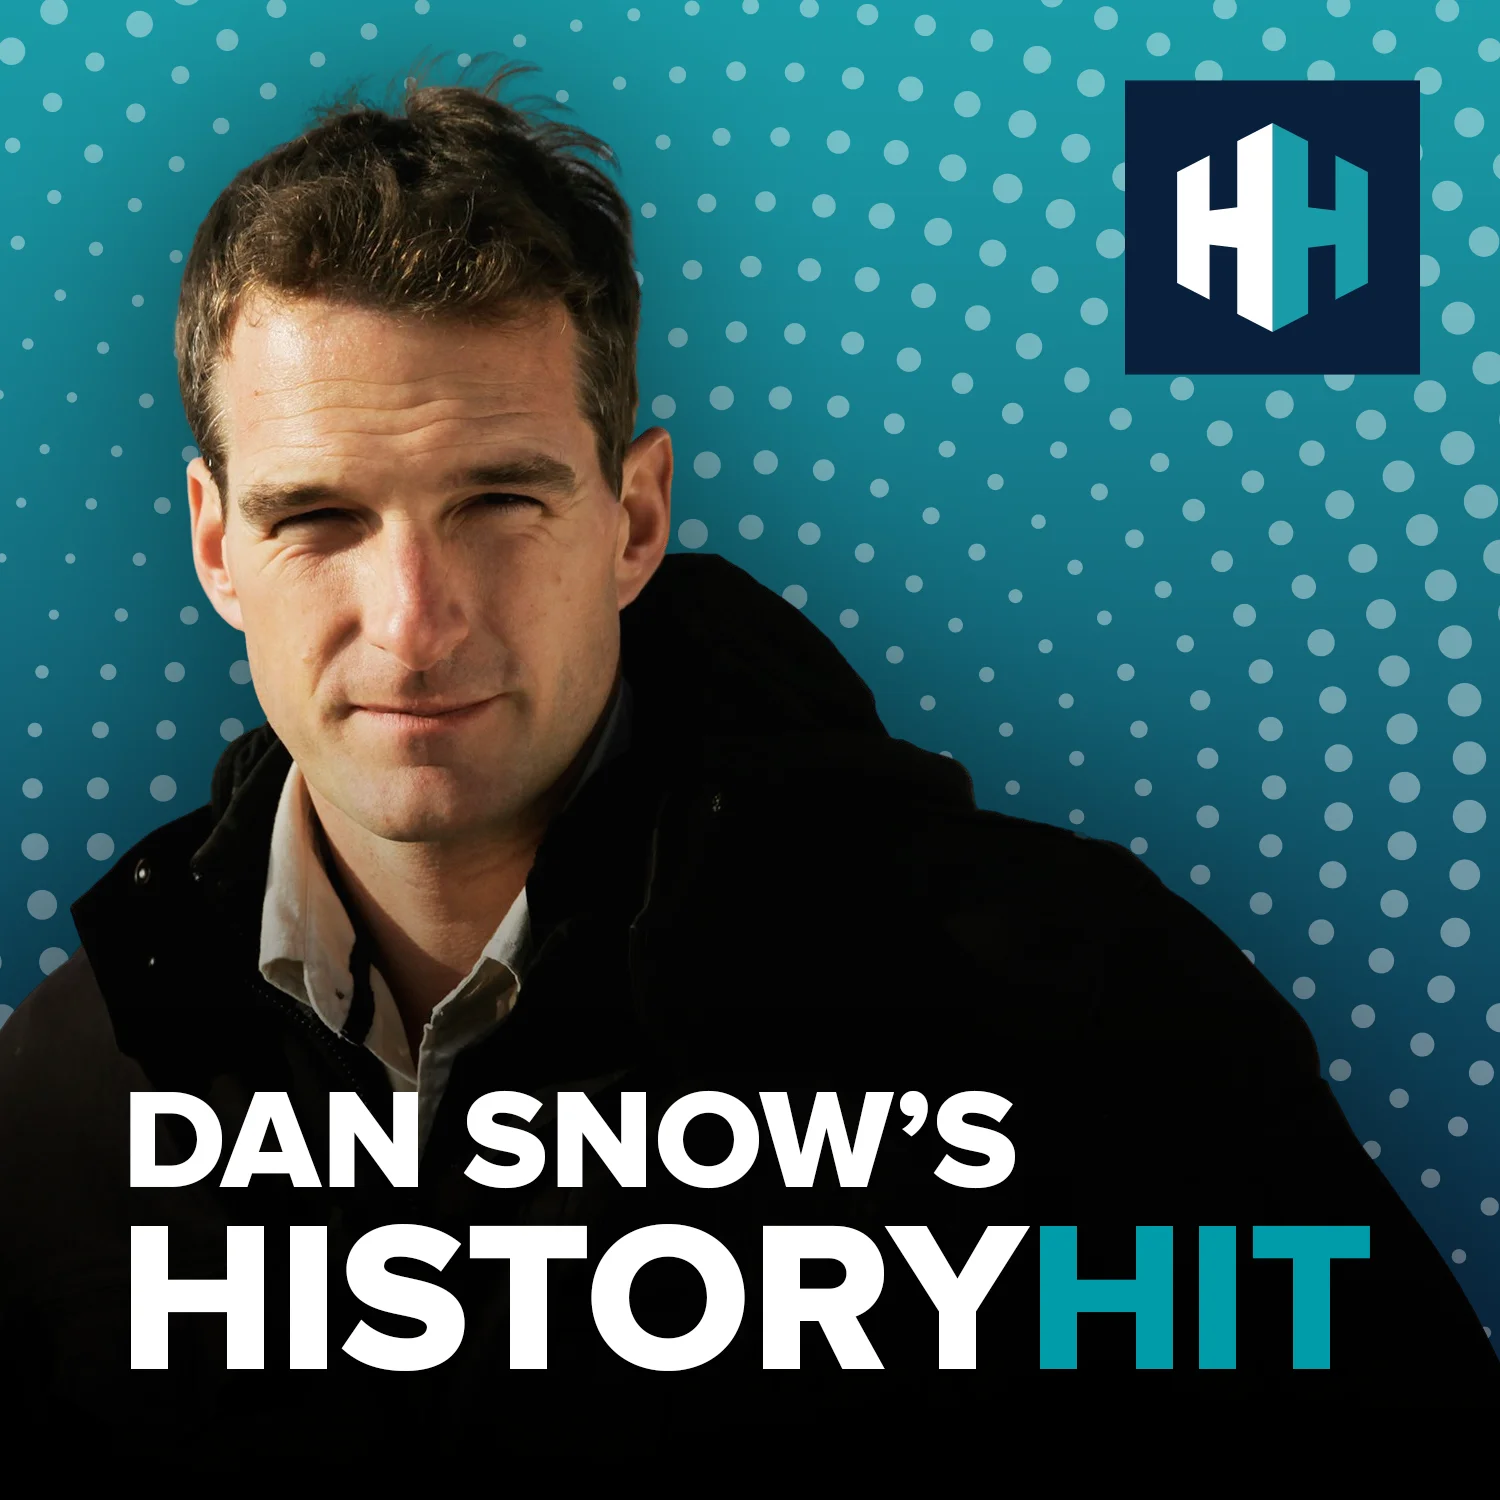 What happened to the bones of the Waterloo battlefield? Dan Snow's History Hit